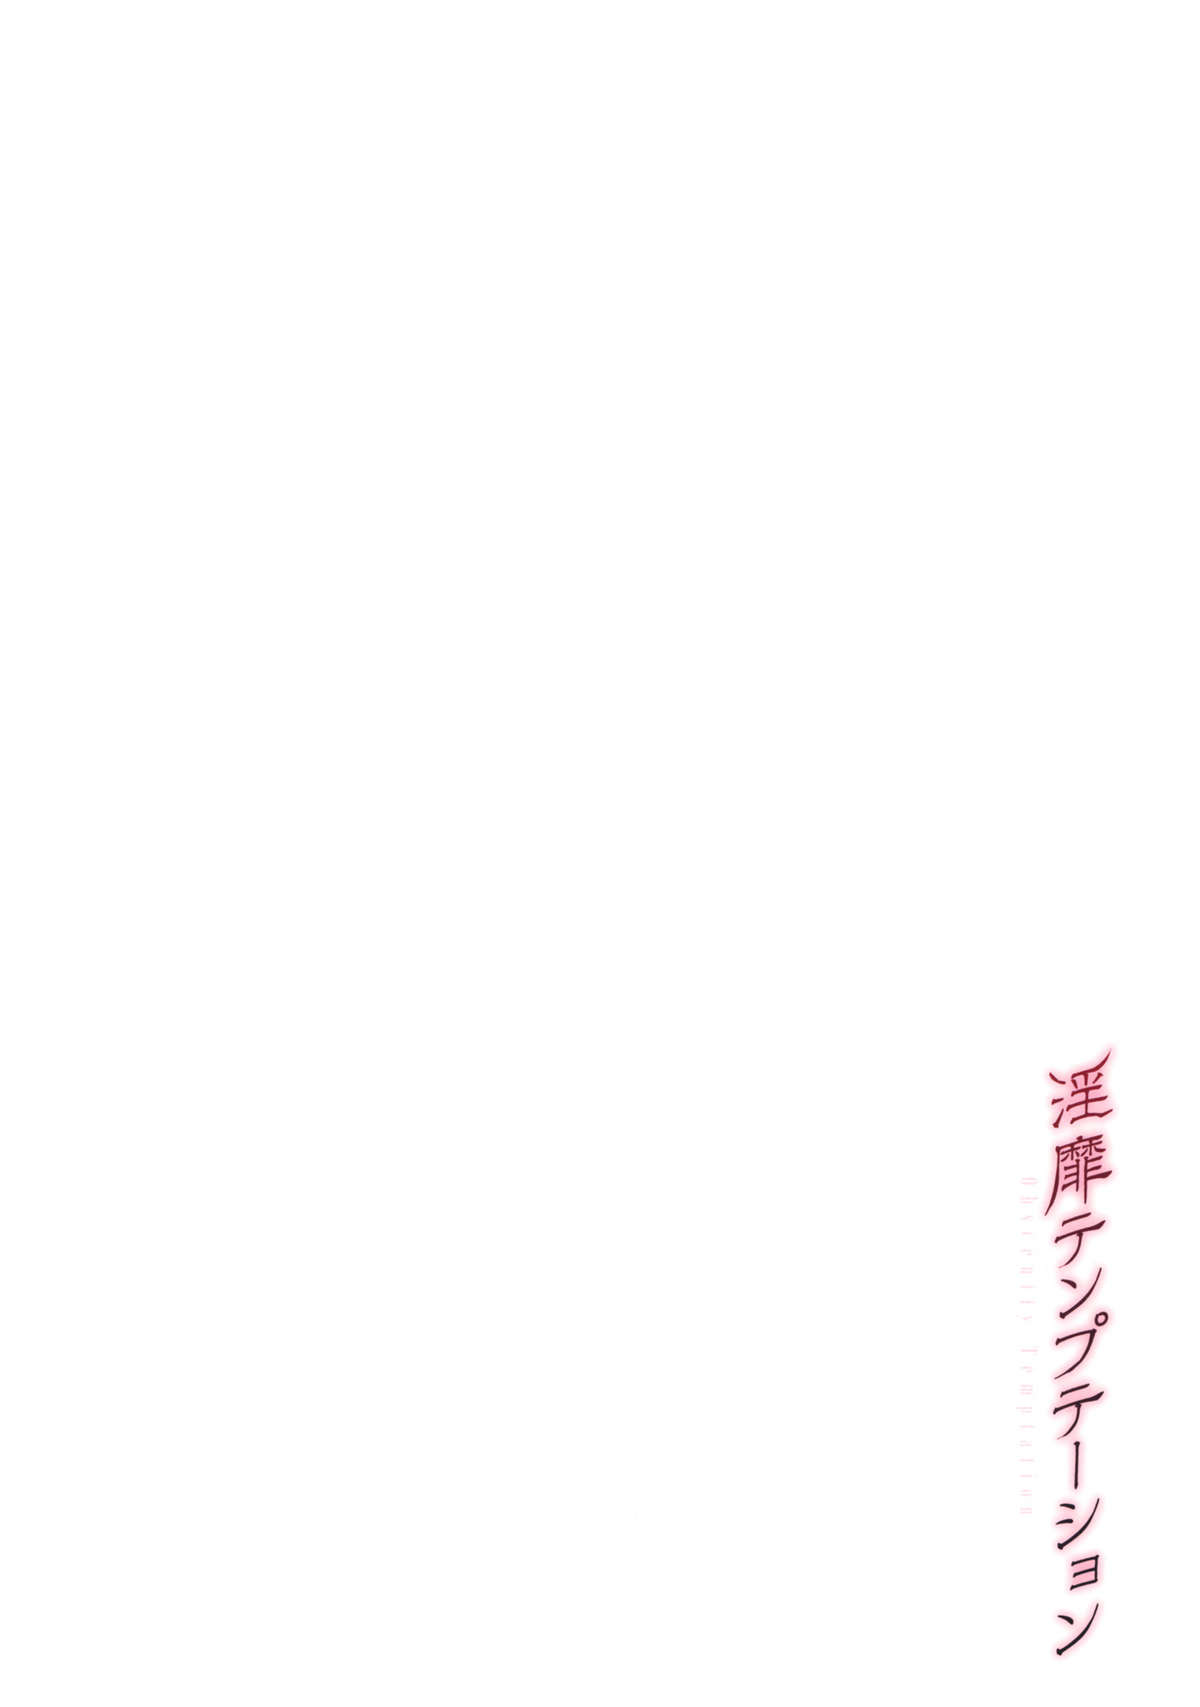 [inkey] Inbi Temptation [inkey] 淫靡テンプテーション [11-02-17]